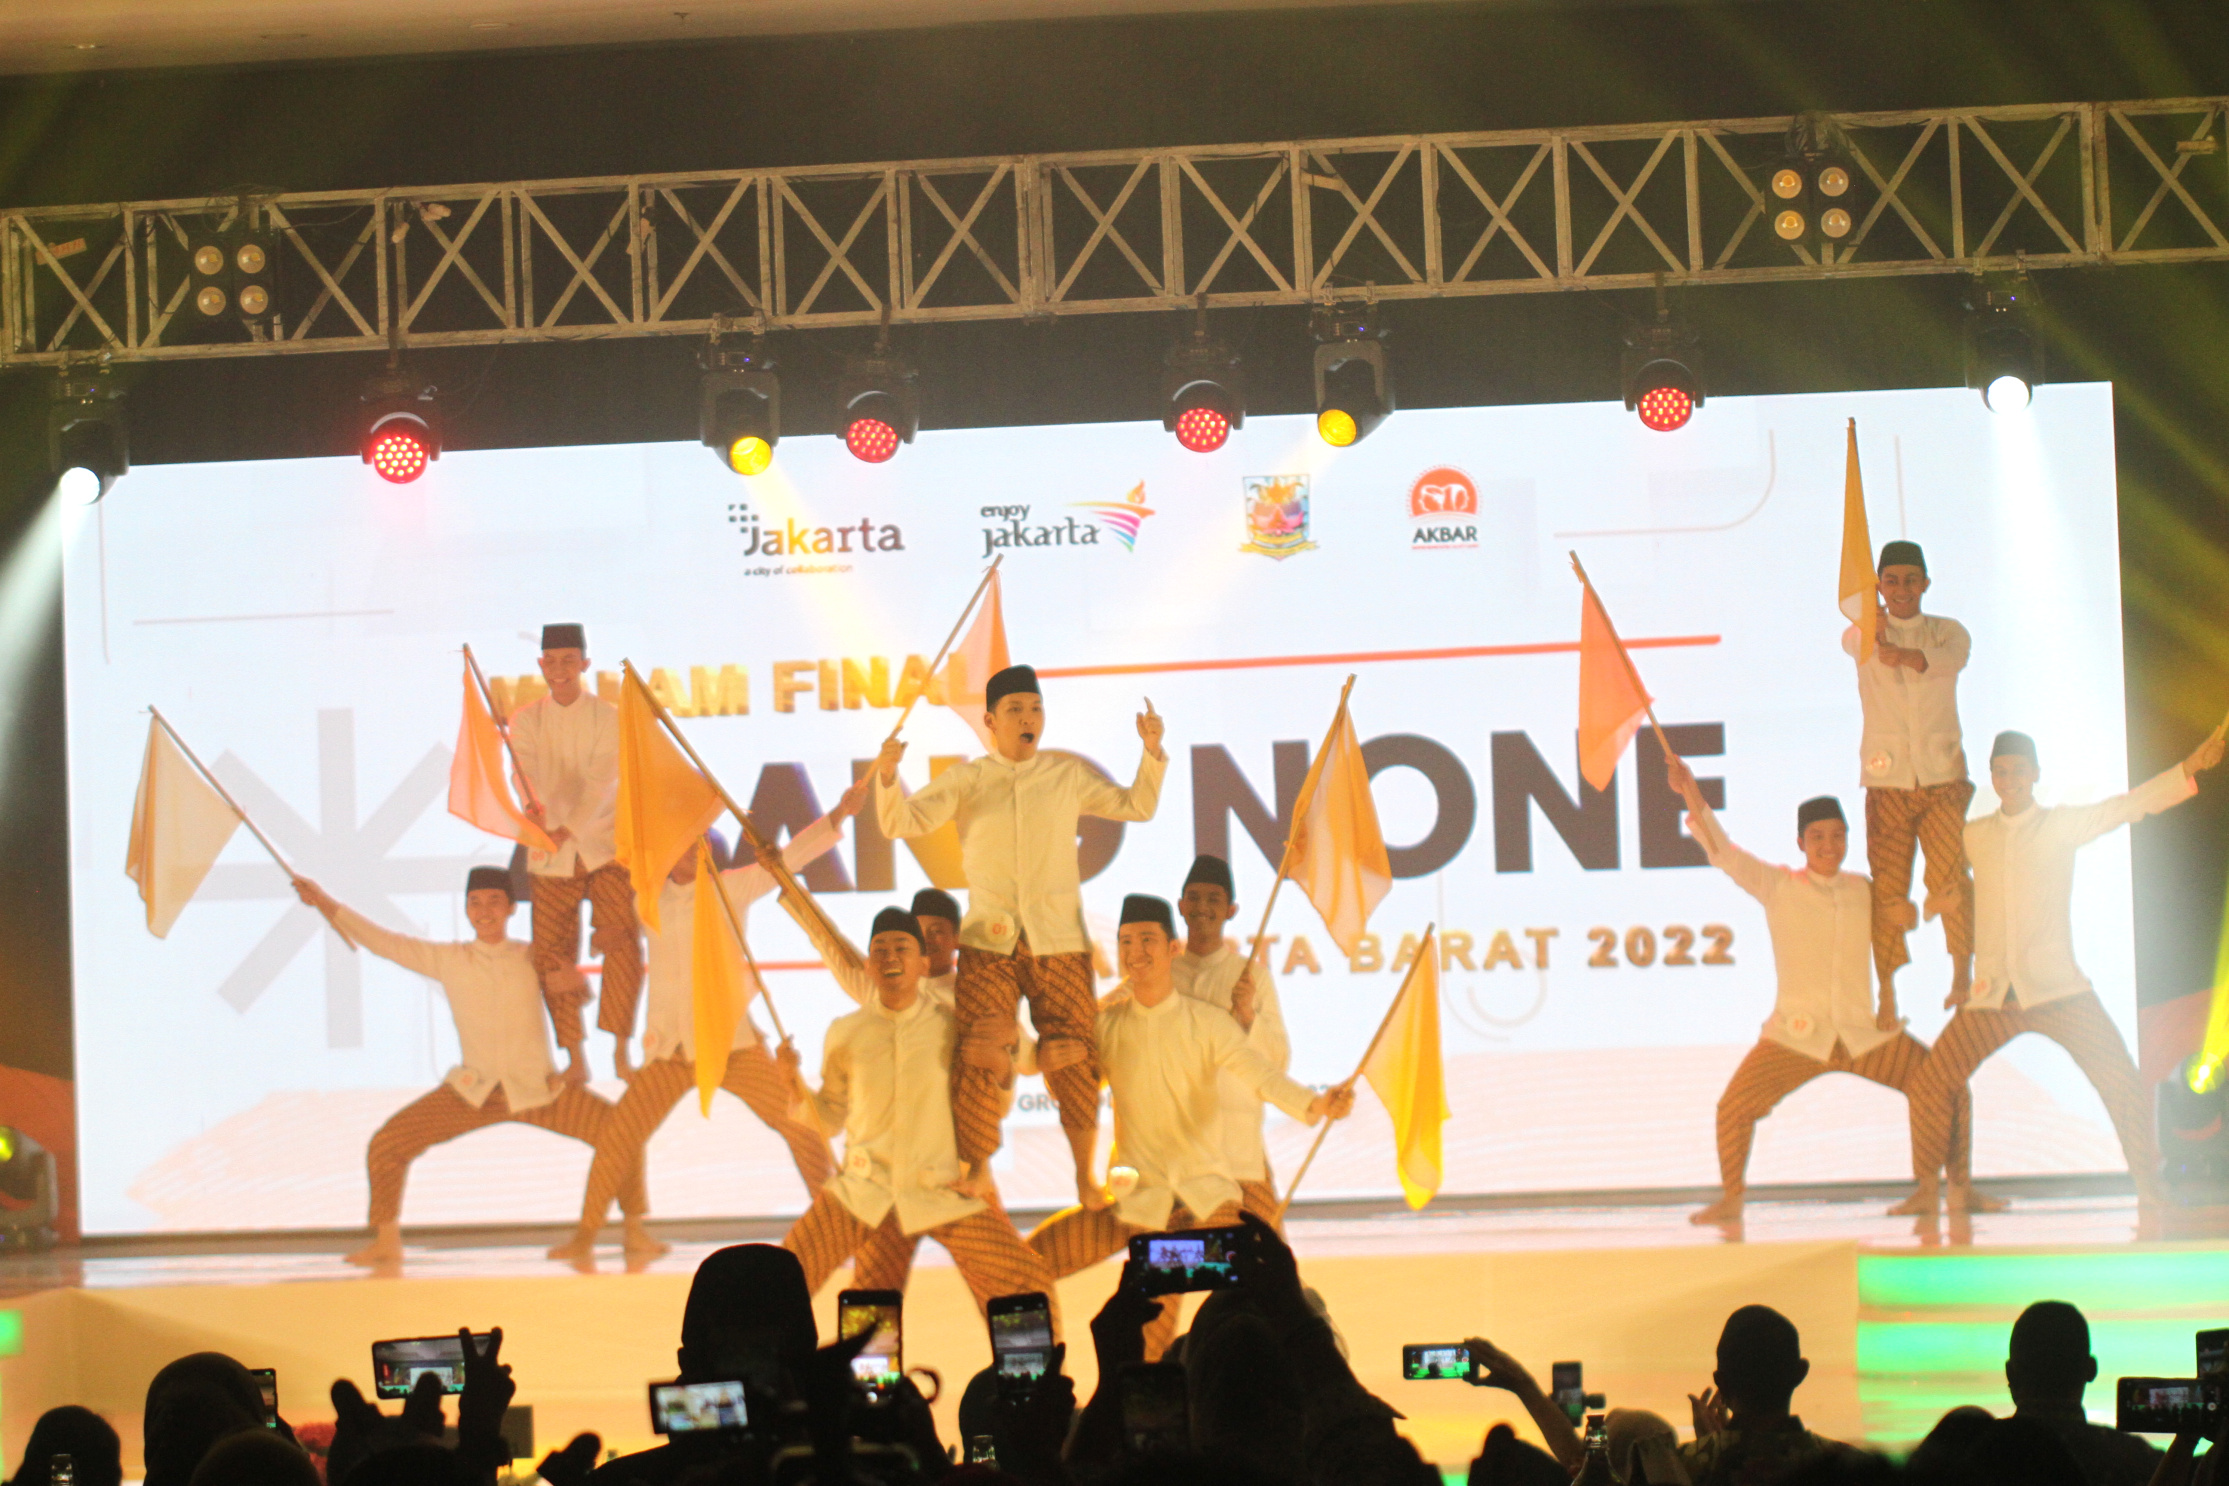 Kemeriahan acara Abang dan None Jakarta Barat 2022 (Ashar/SinPo.id)